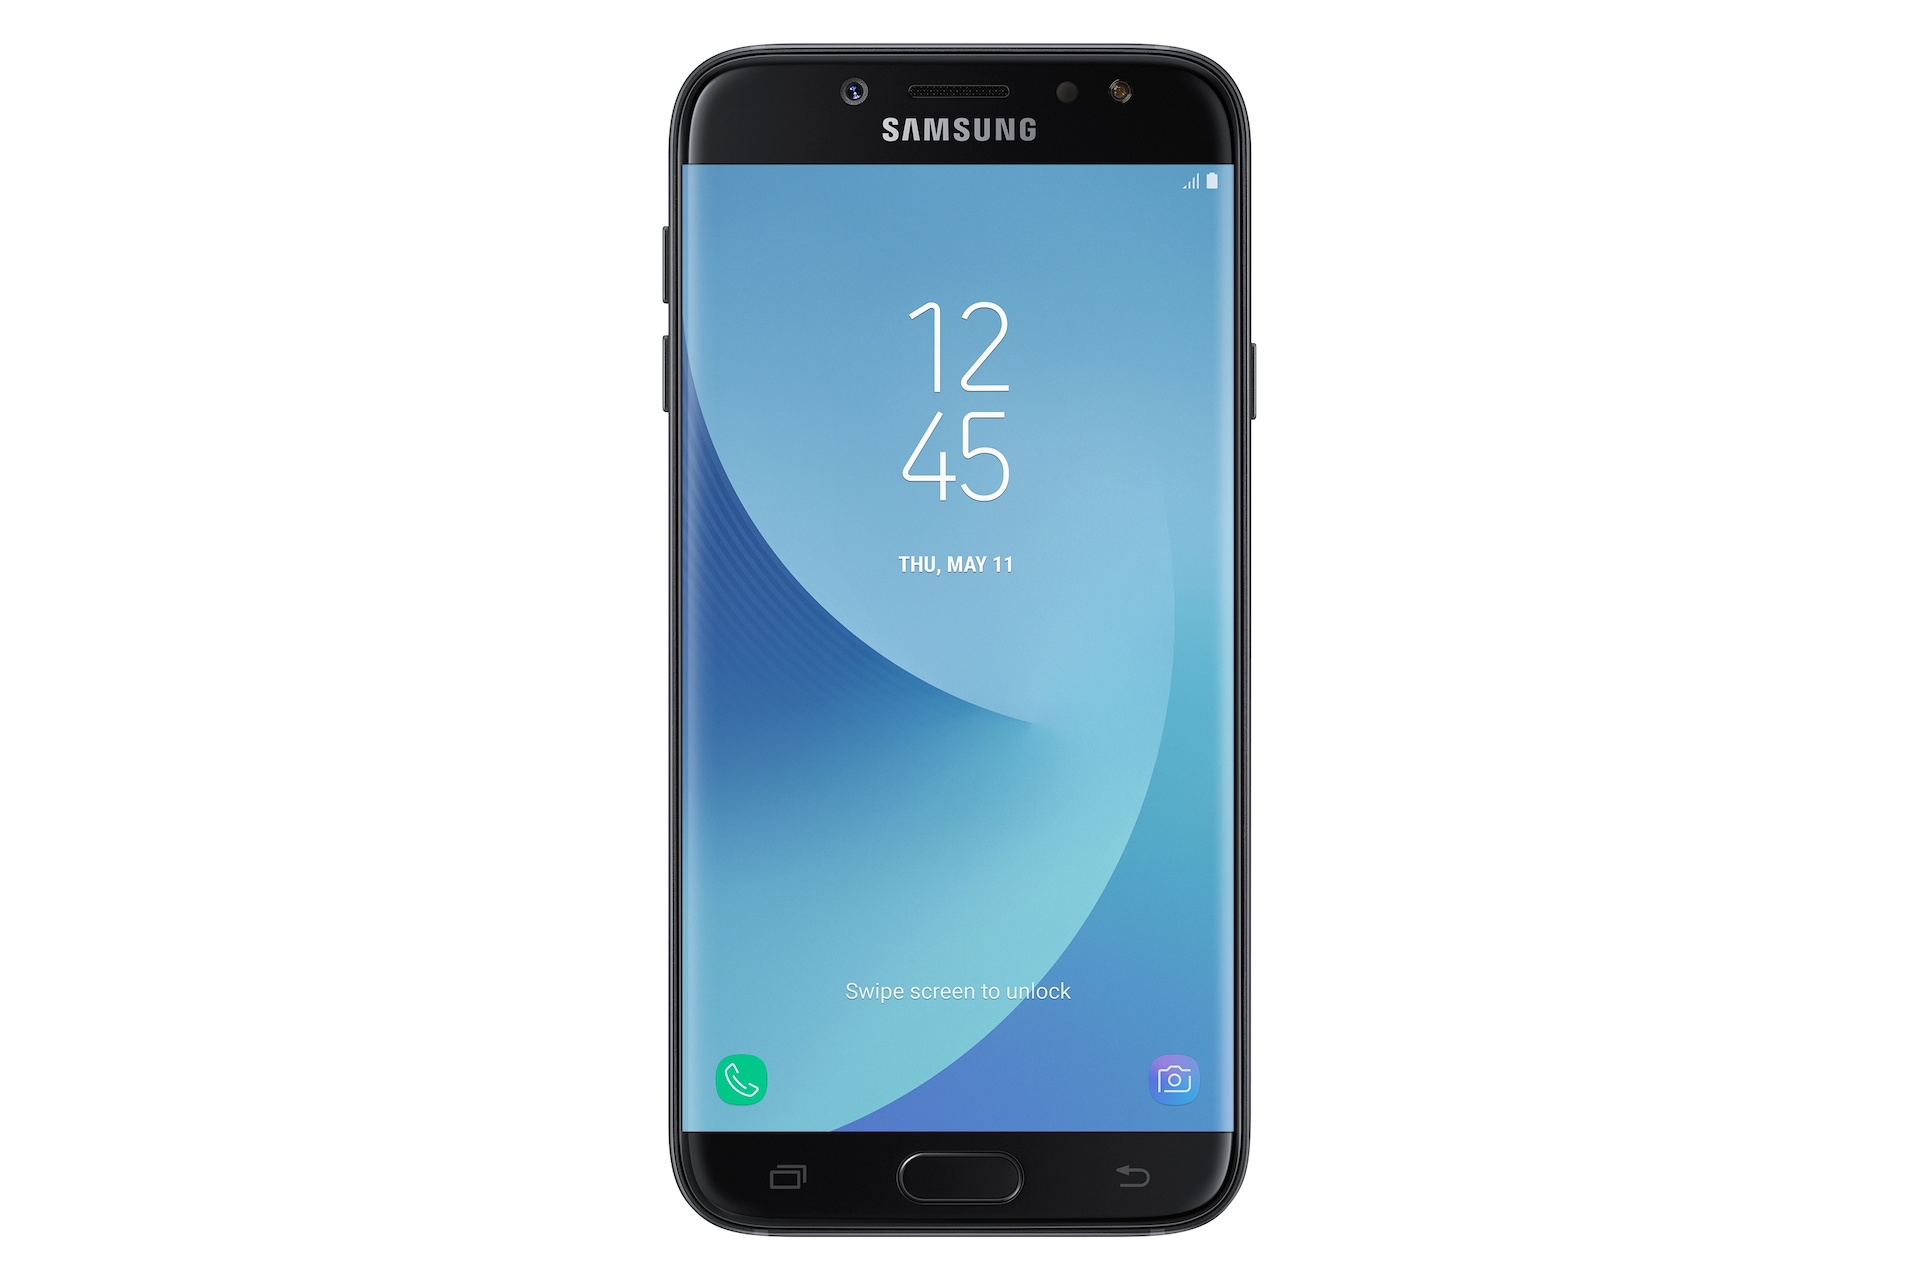 Cara Root Samsung Galaxy J7 Pro Smj730g Dan Install Twrp